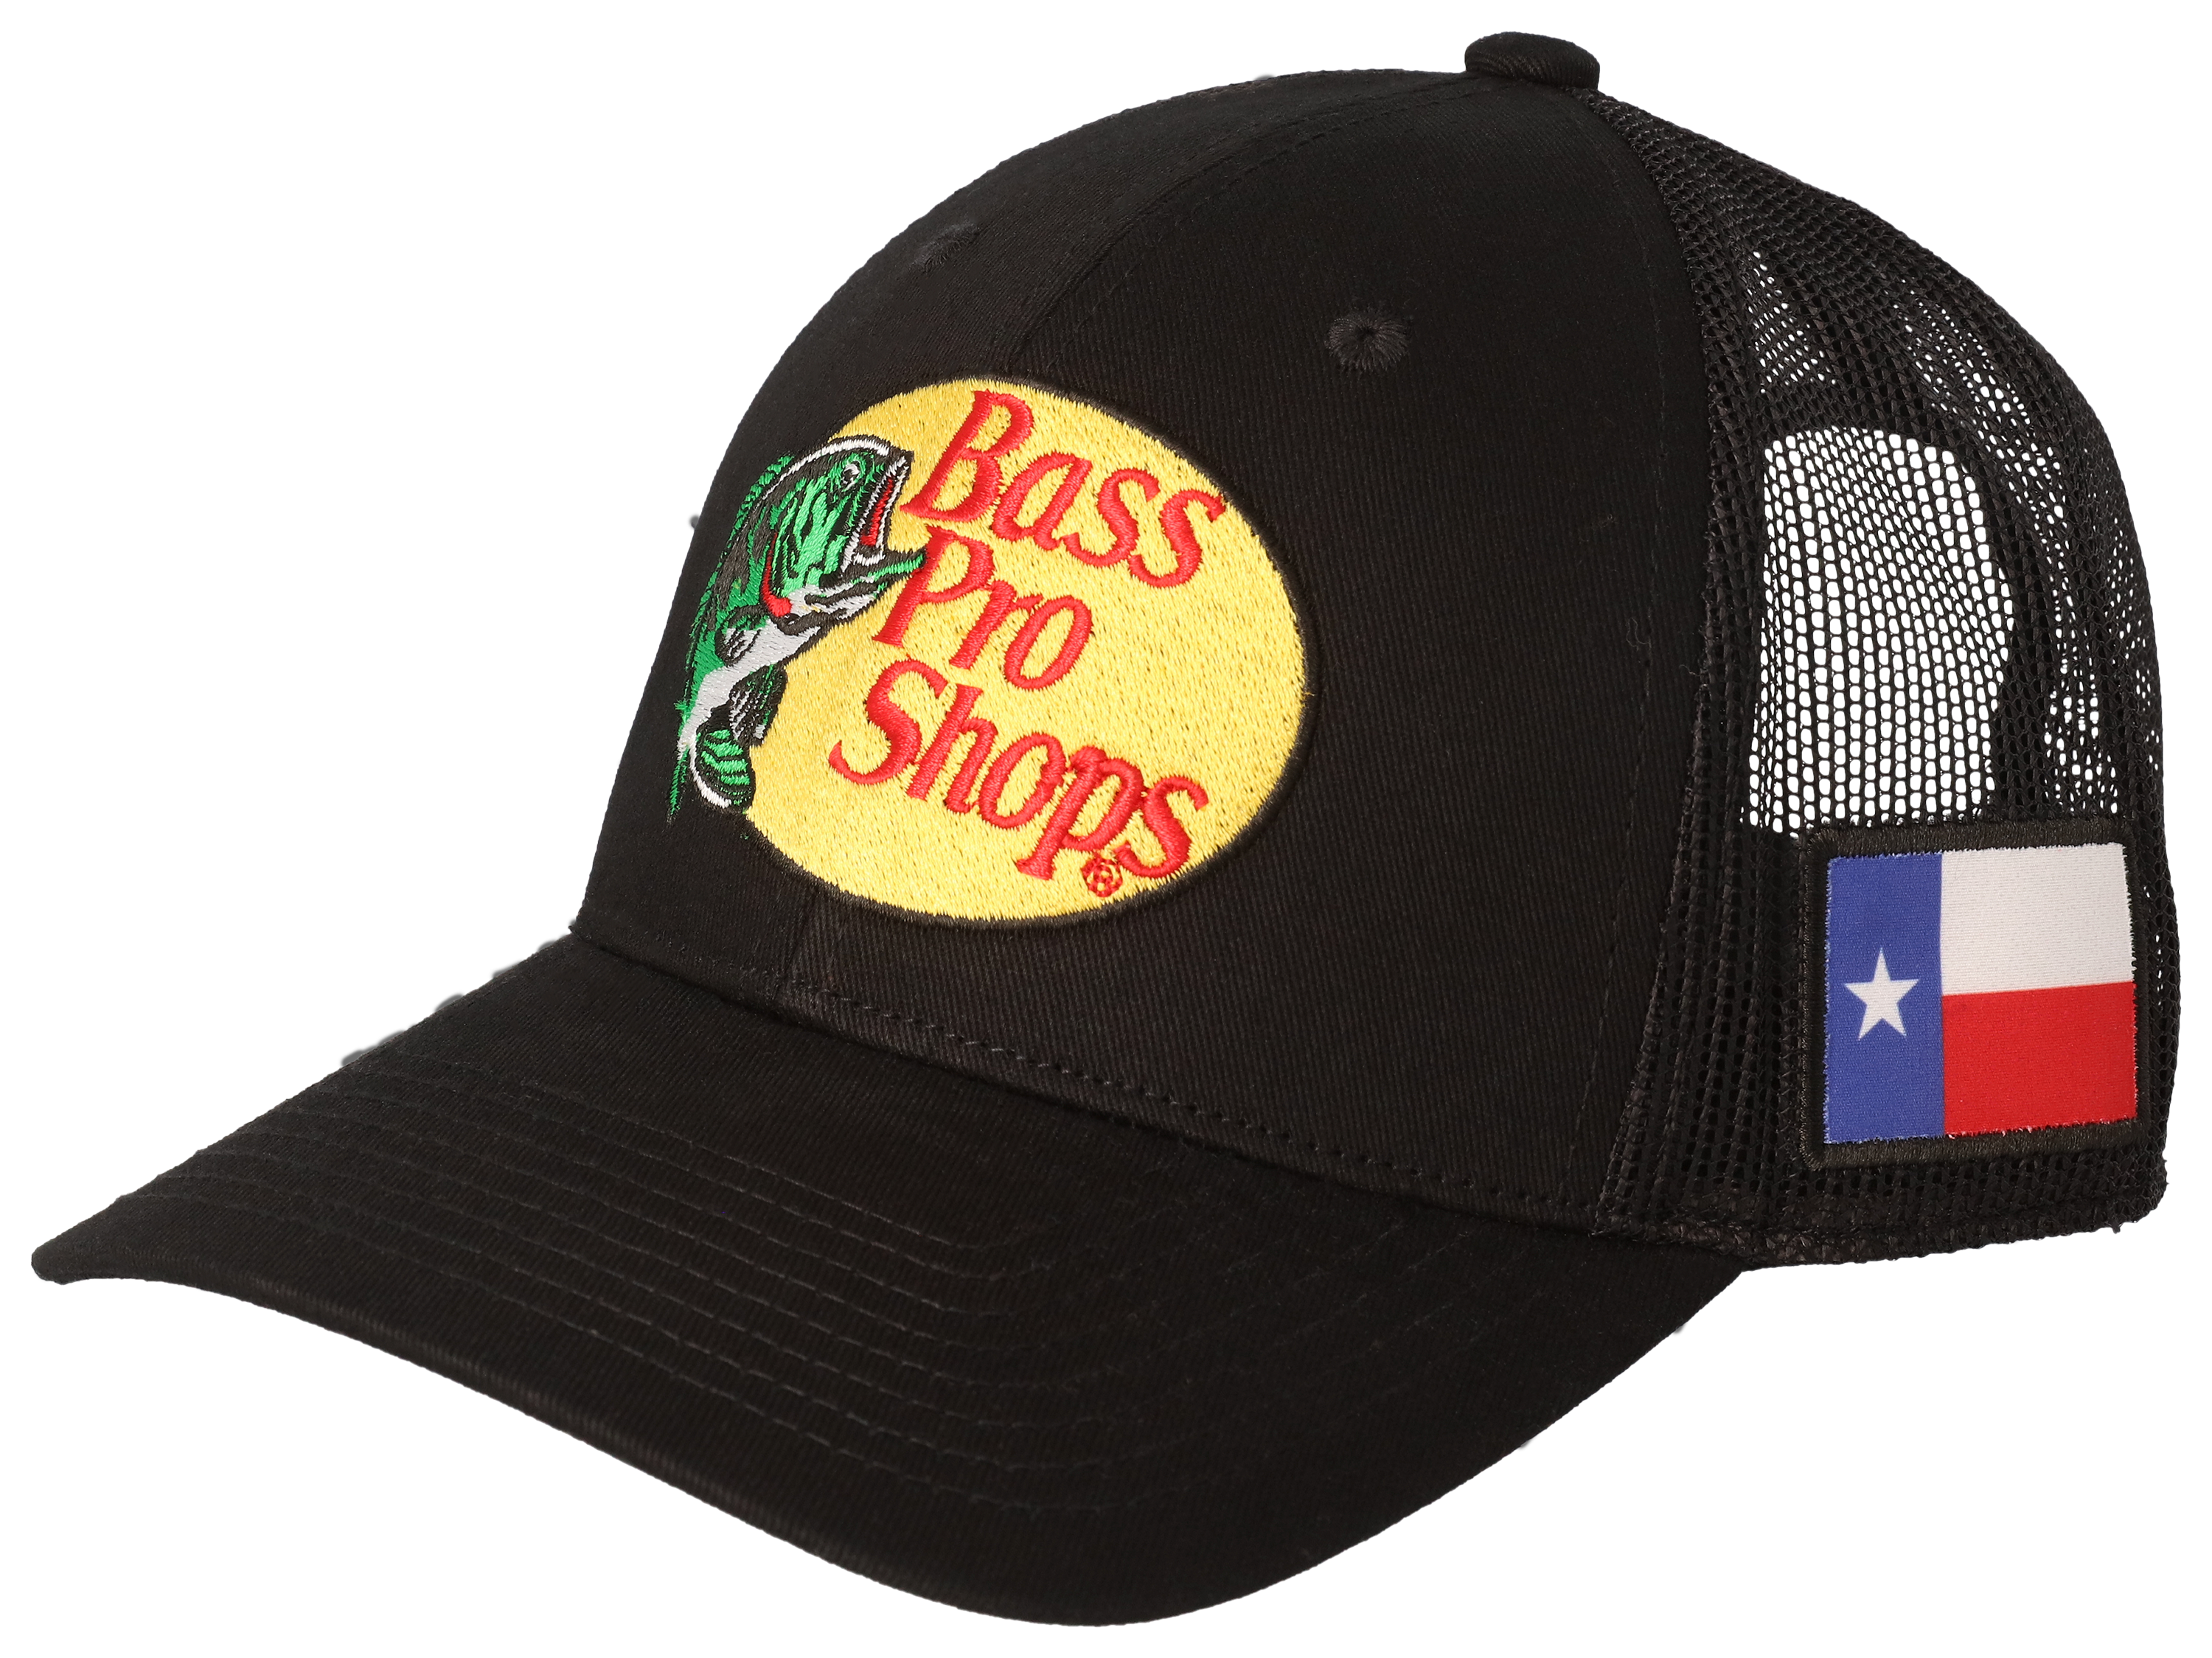 Bass Pro Shops Texas State Logo Short-Sleeve T-Shirt for Men